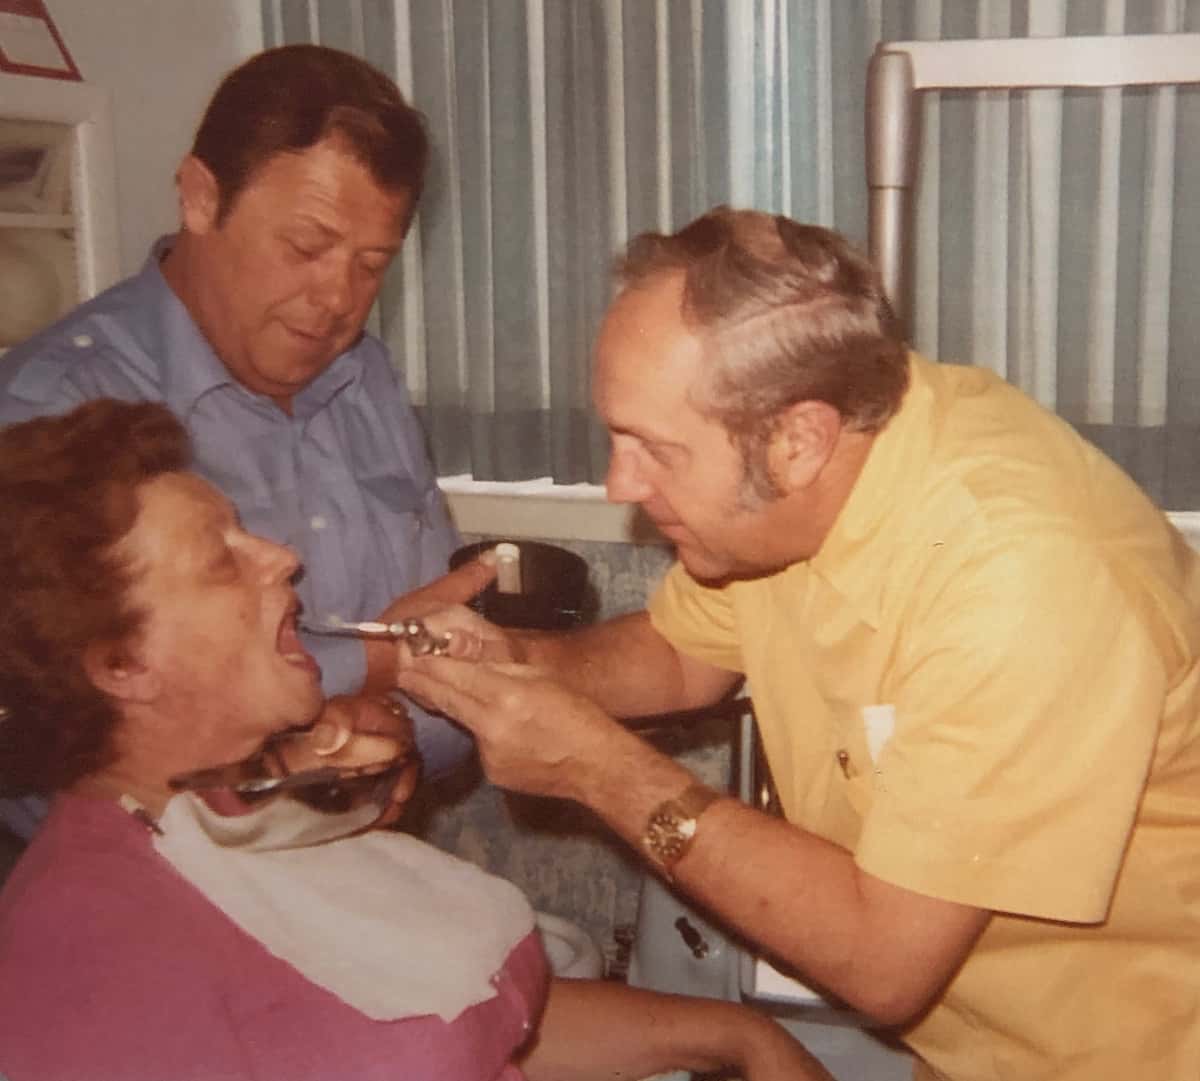 Denturist Joe Schankula doing a procedure on a patient, Tim's maternal grandmother, with Tim's maternal grandfather holding a spit tray underneath her chin